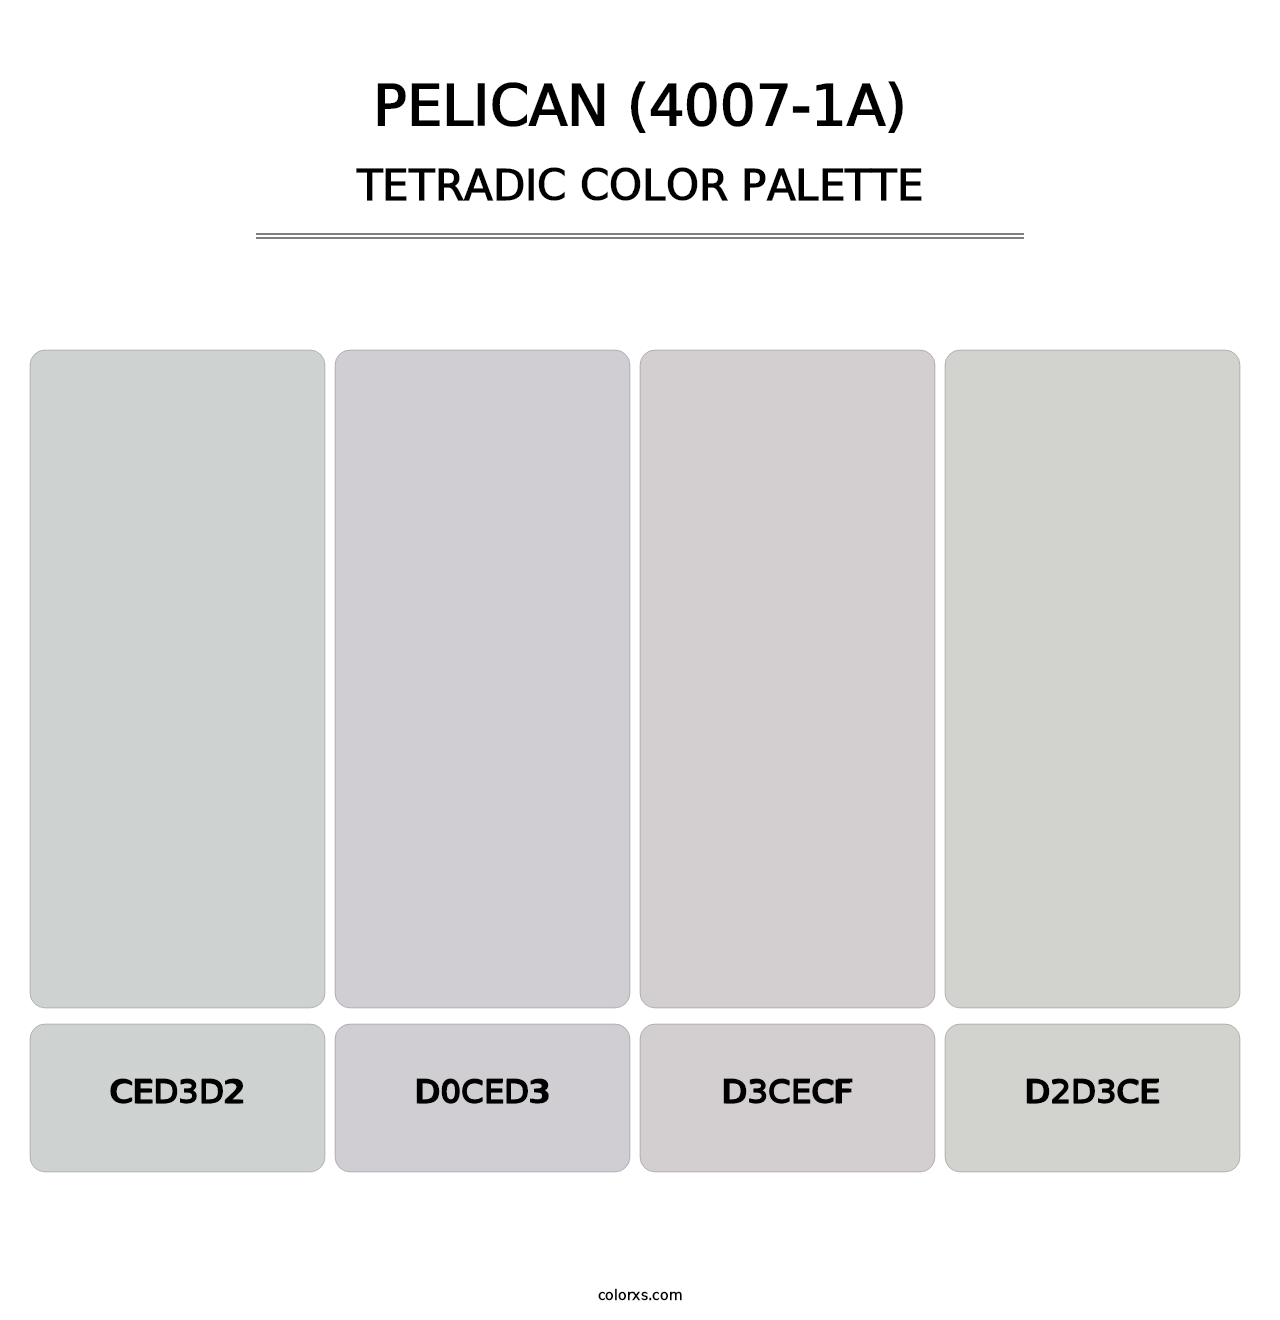 Pelican (4007-1A) - Tetradic Color Palette